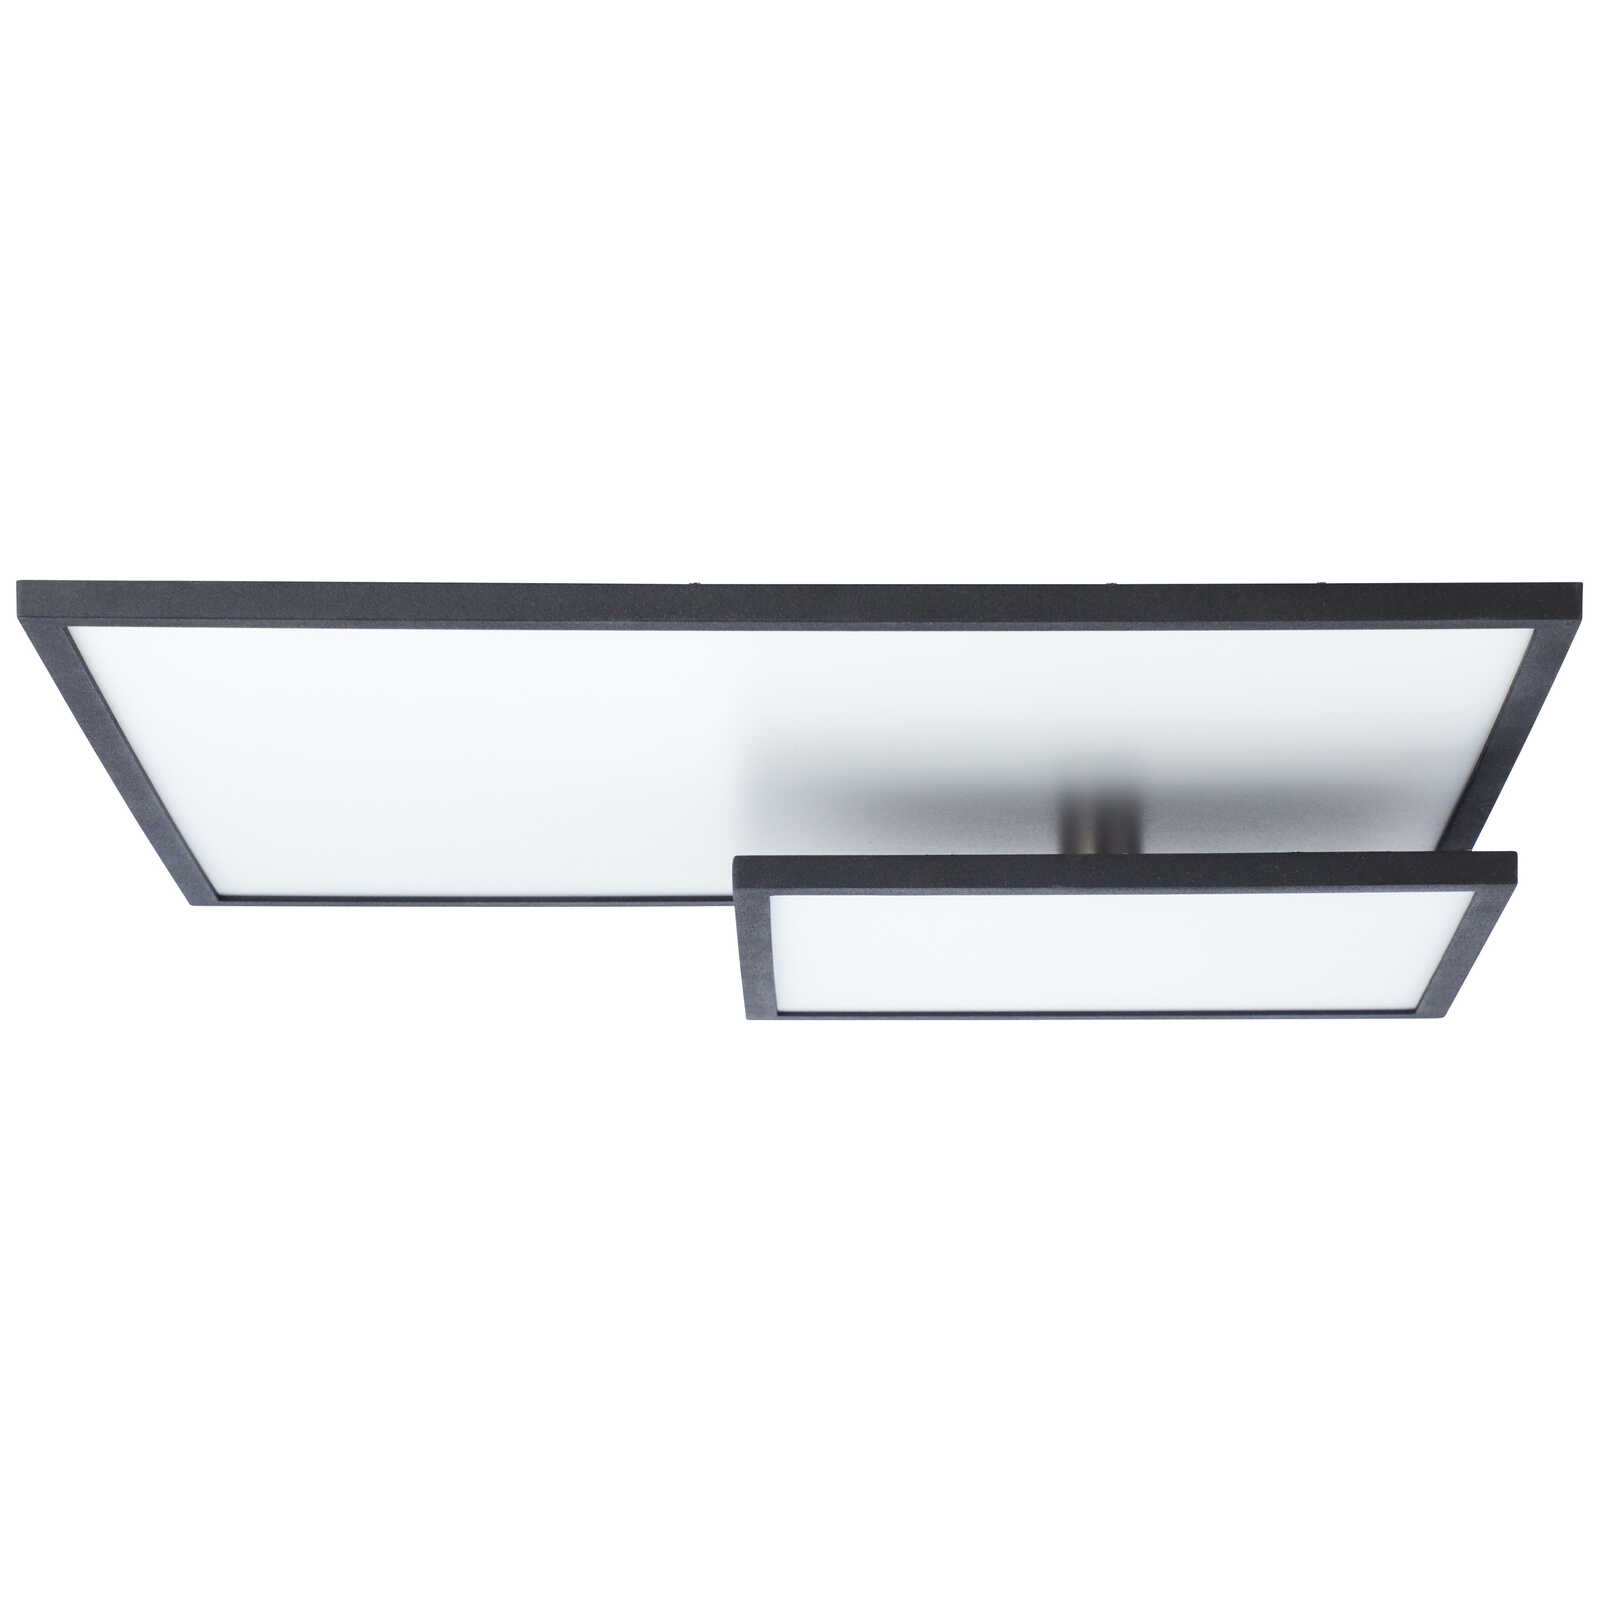             Metalen plafondlamp - Benno 1 - Zwart
        